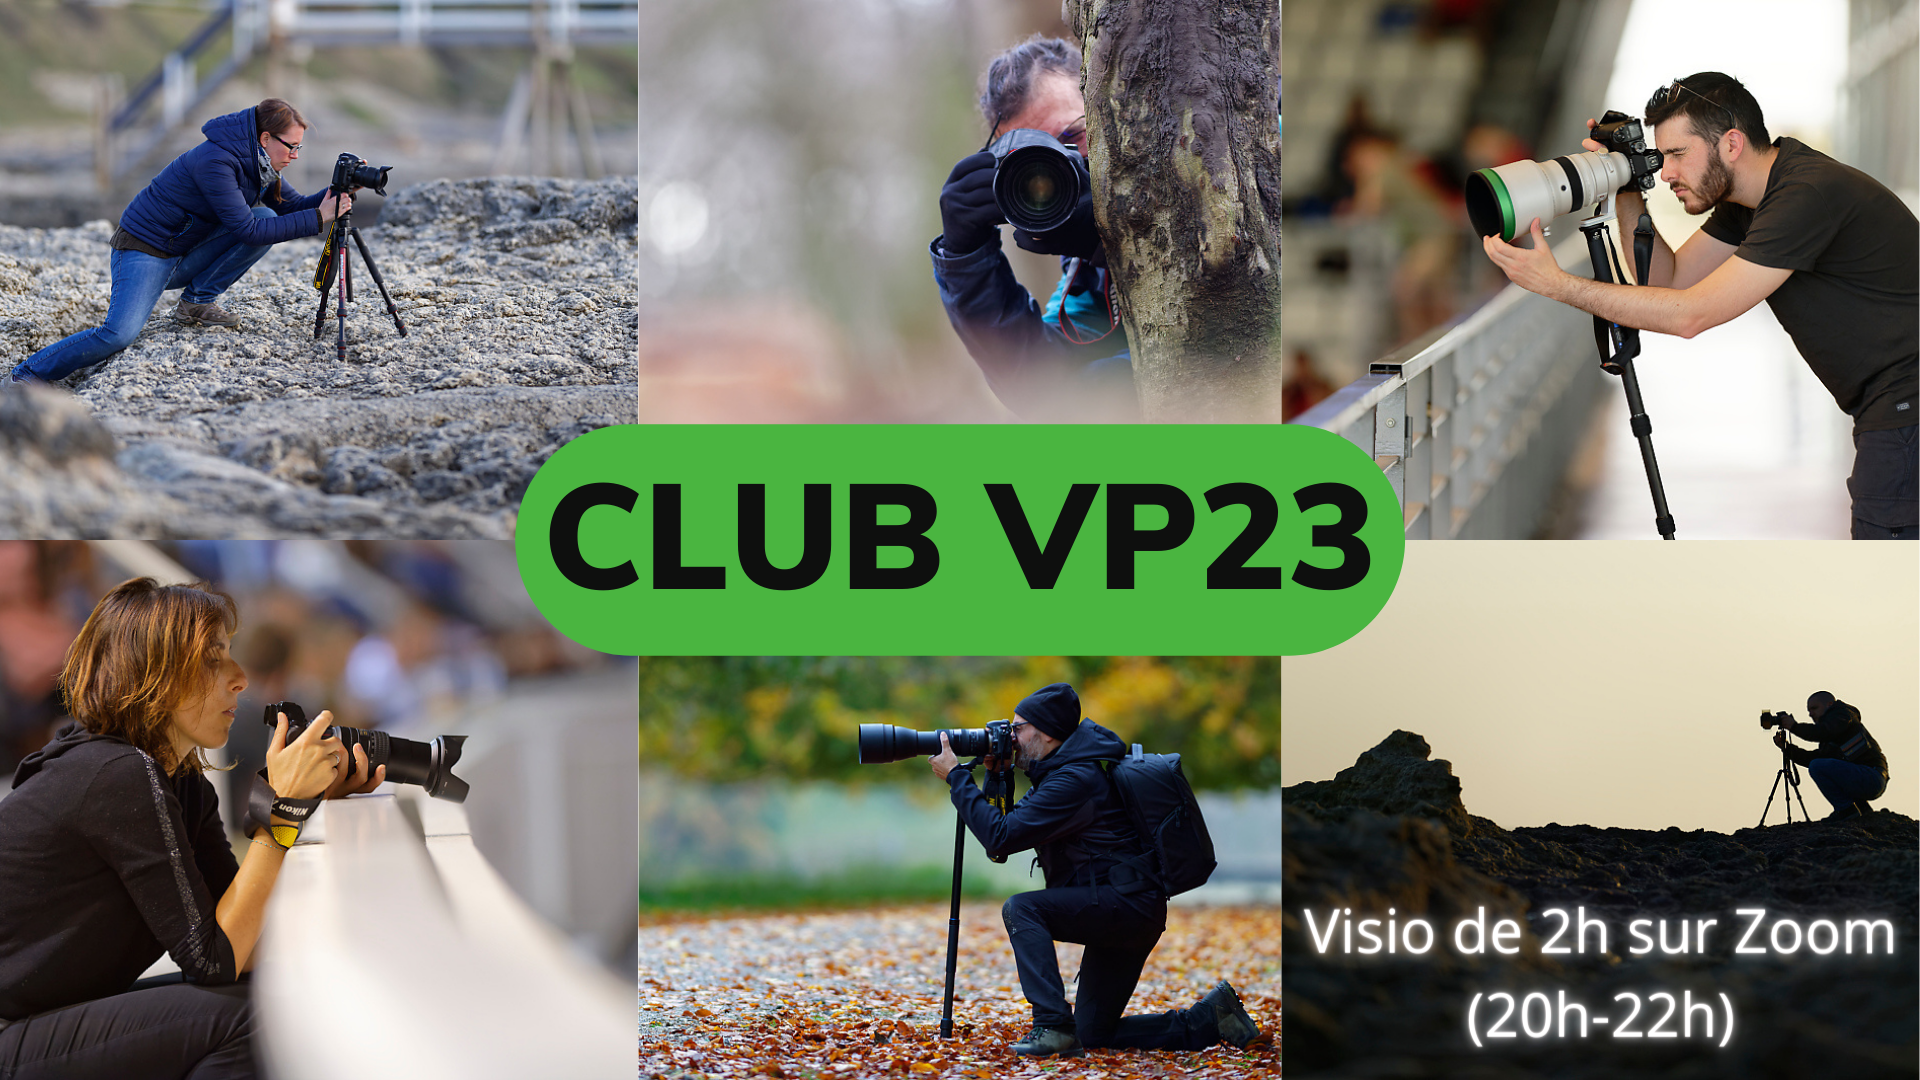 Club VP23 - Visio collective Zoom